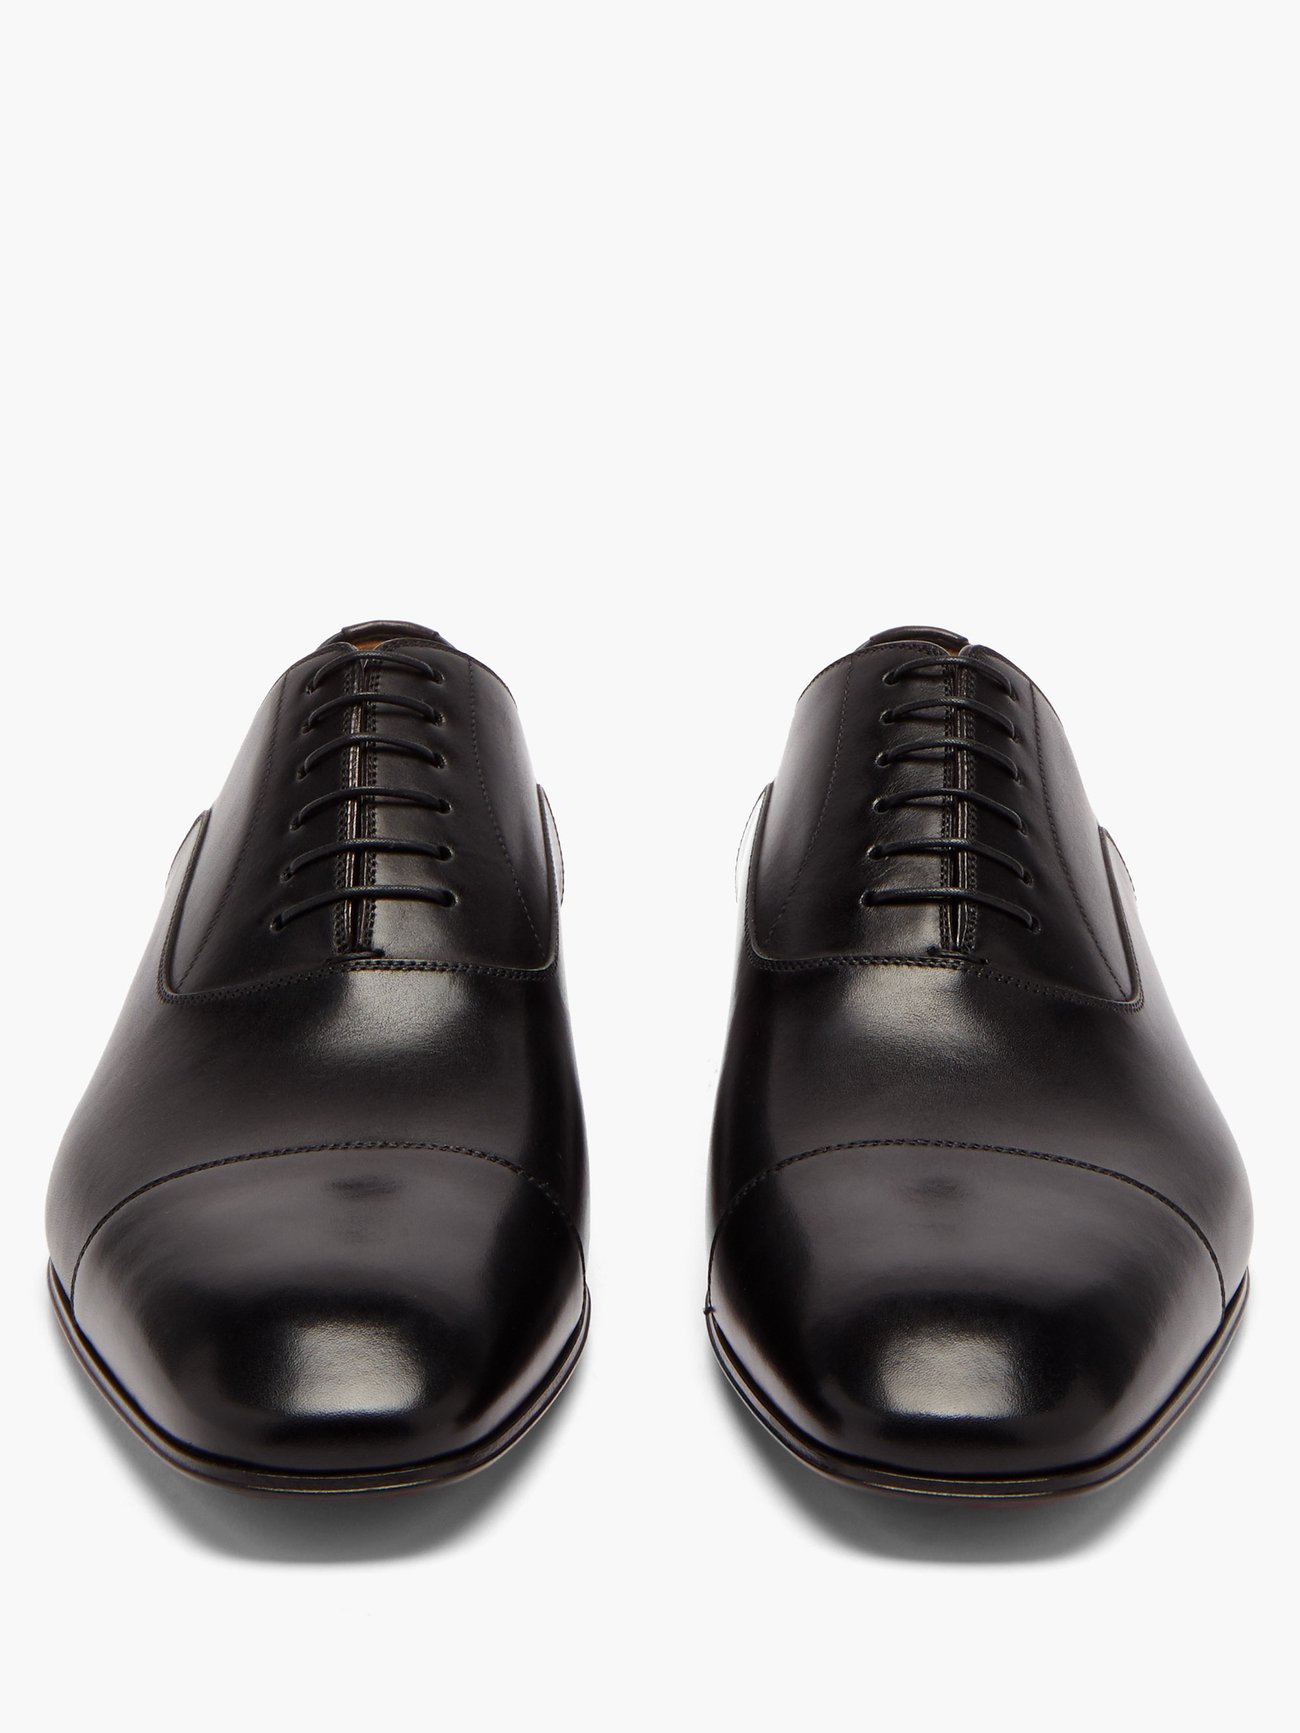 Christian Louboutin Men's Greggo Flat Leather Oxfords - Black - Size 13